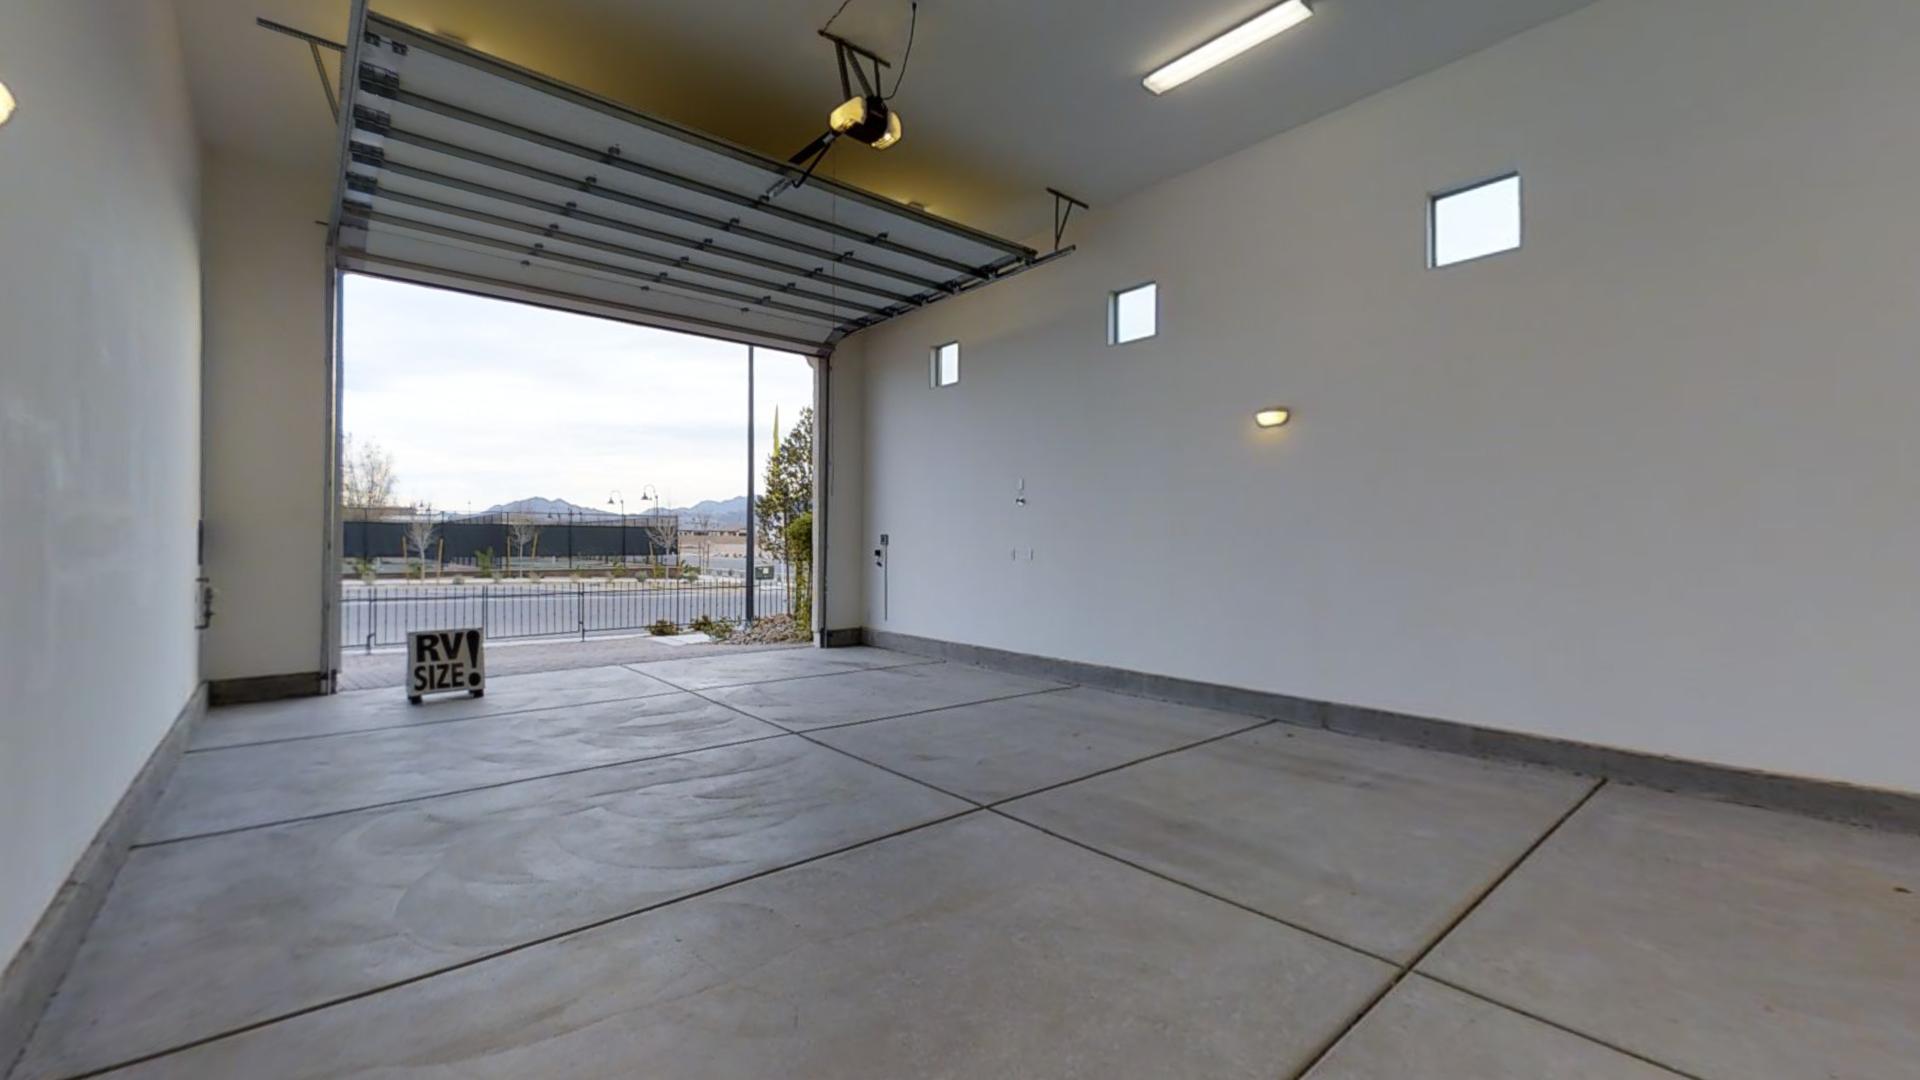 Matterport Brand New Home Shoot in Henderson with an RV Garage